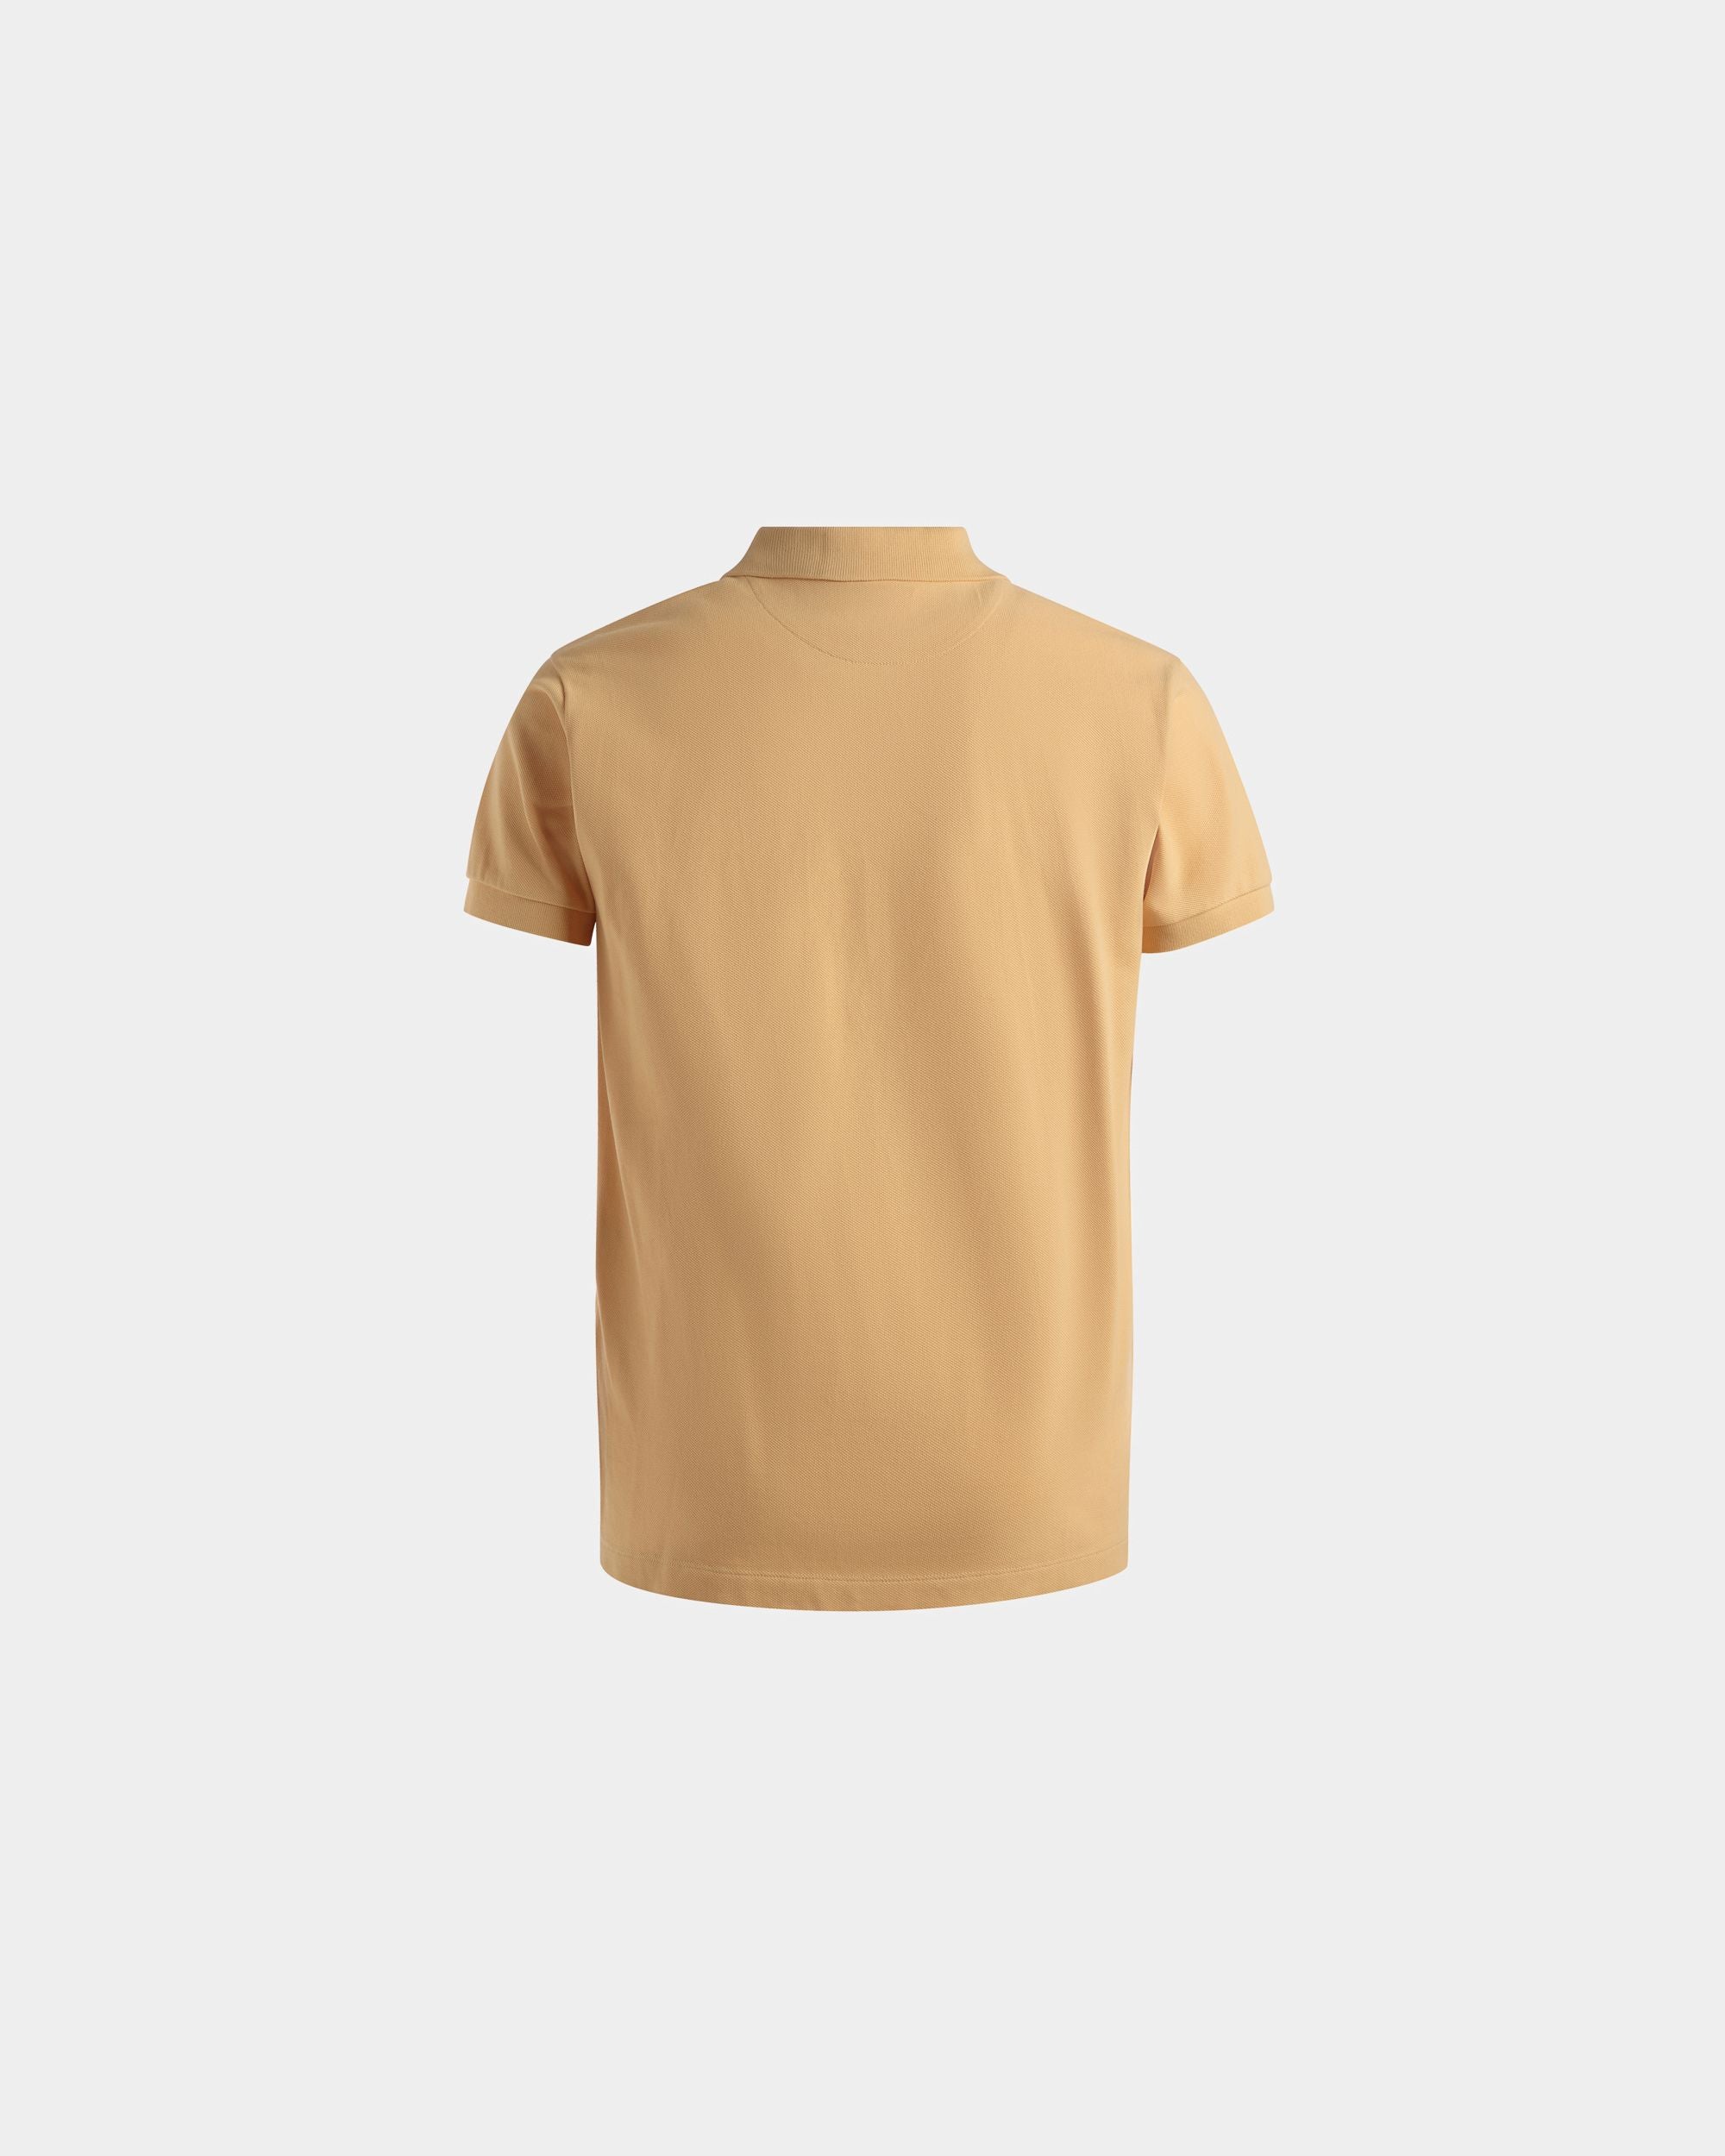 Emblem Poloshirt | Poloshirt für Herren | Cremefarbene Baumwolle | Bally | Still Life Rückseite